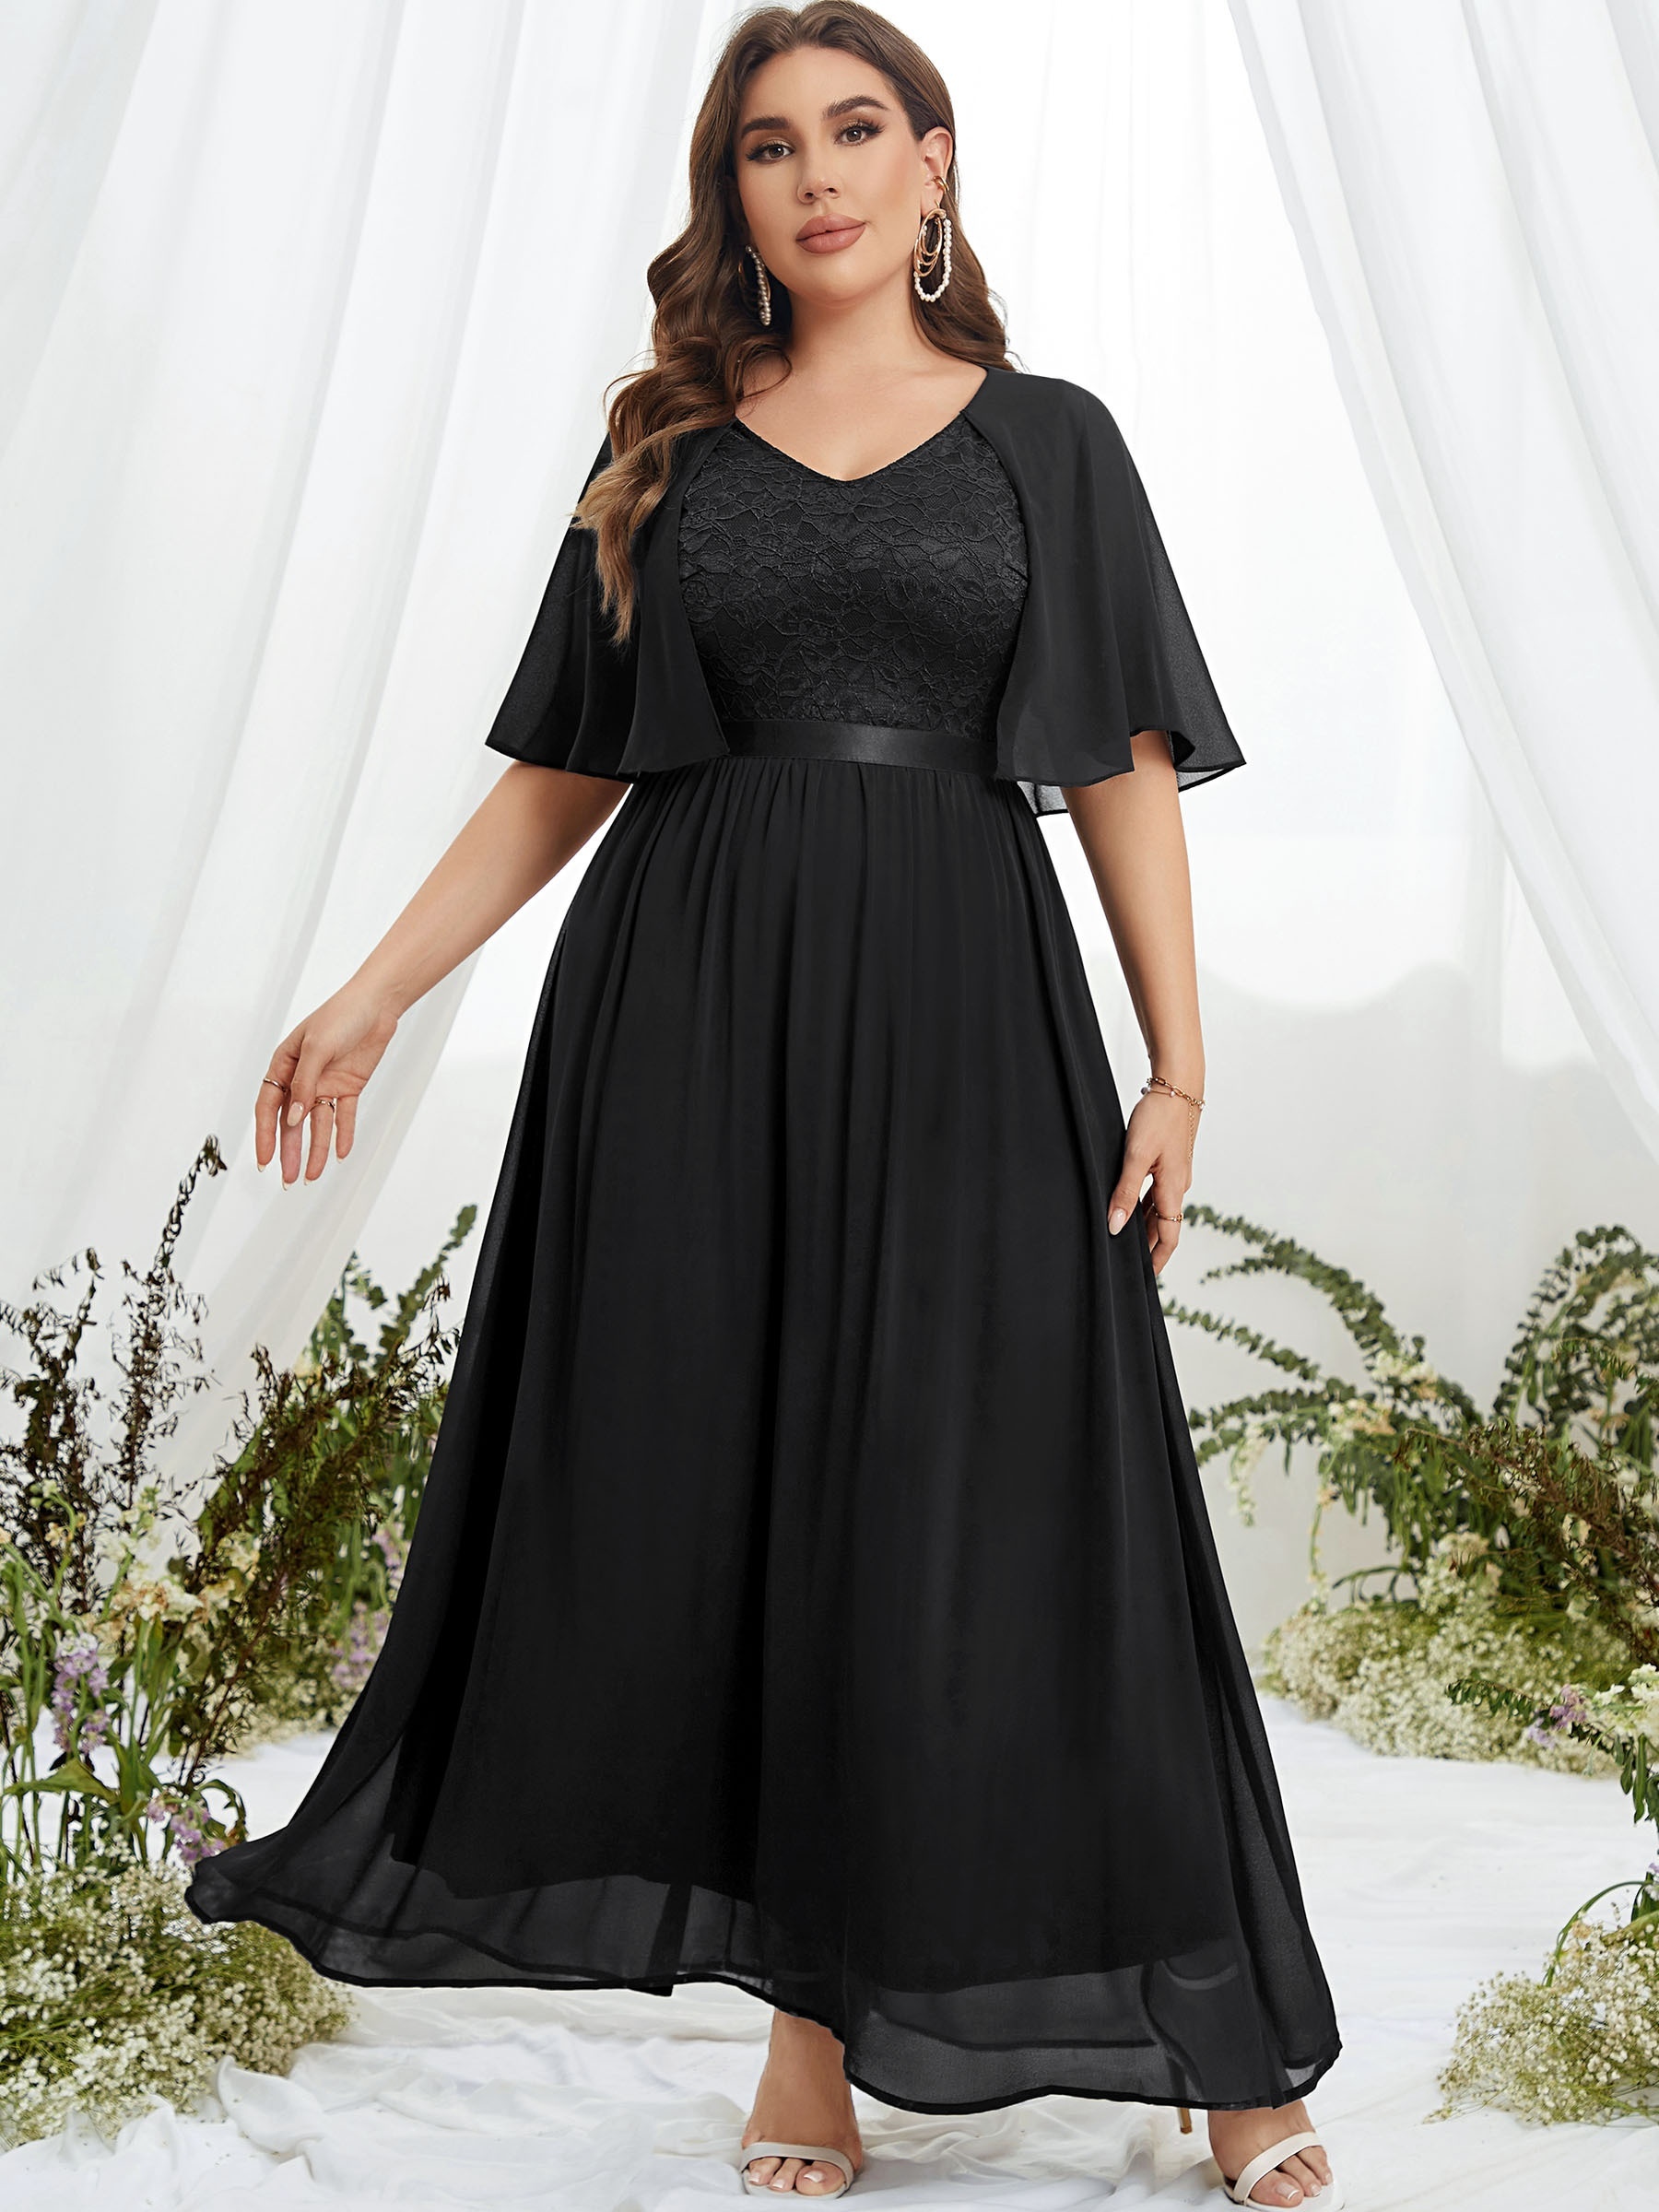 black formal dresses: Women's Plus Size Clothing